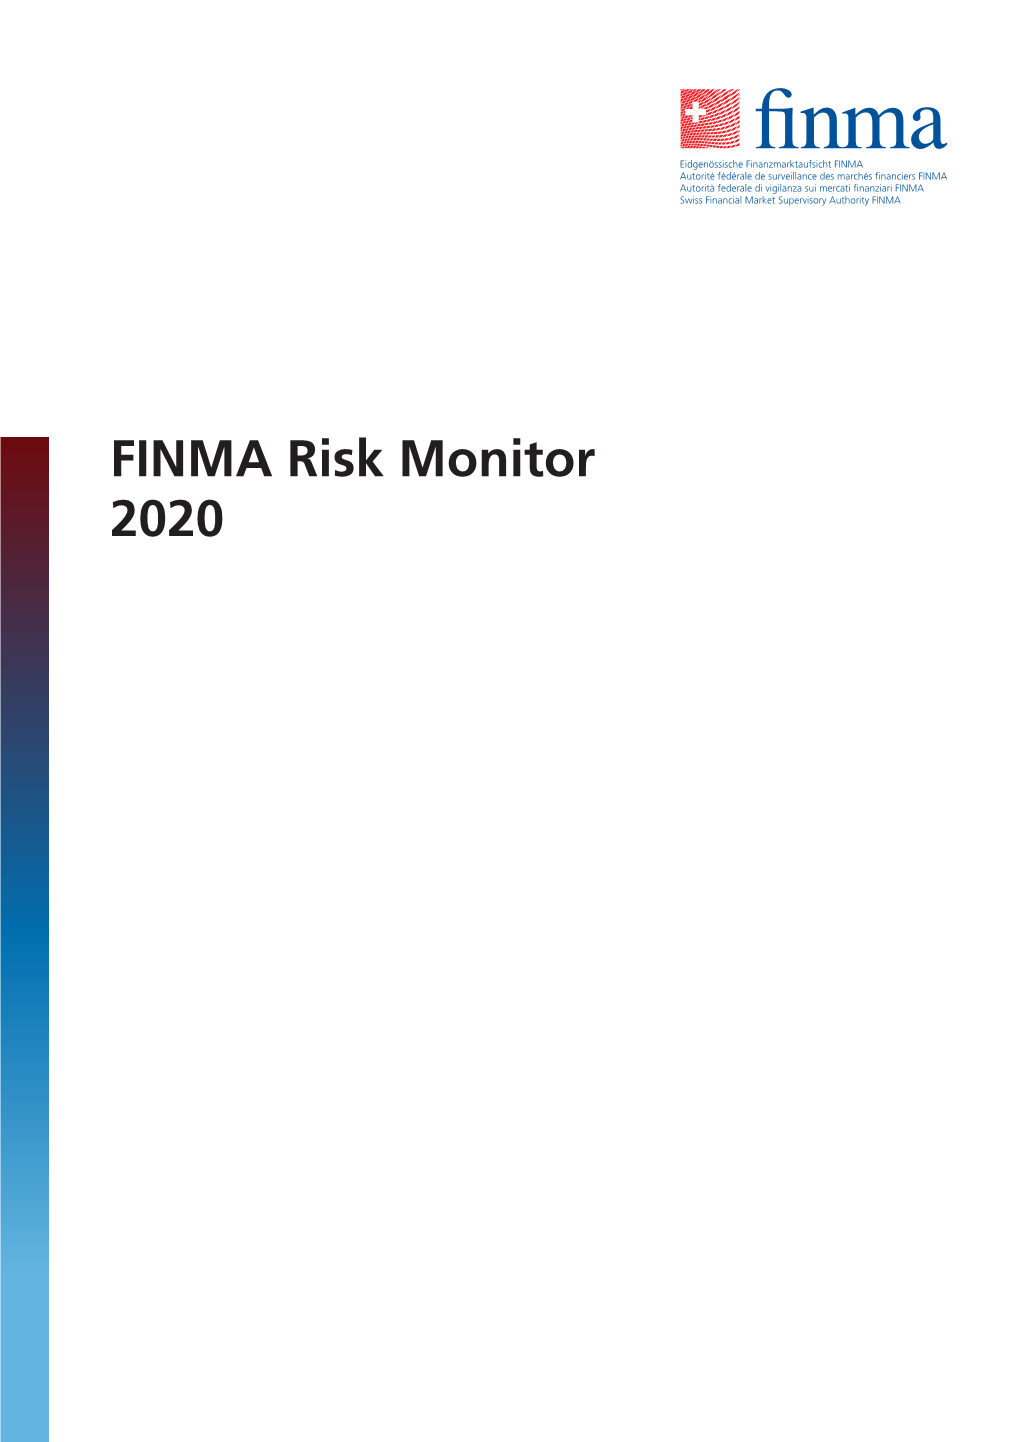 FINMA Risk Monitor 2020 Contents